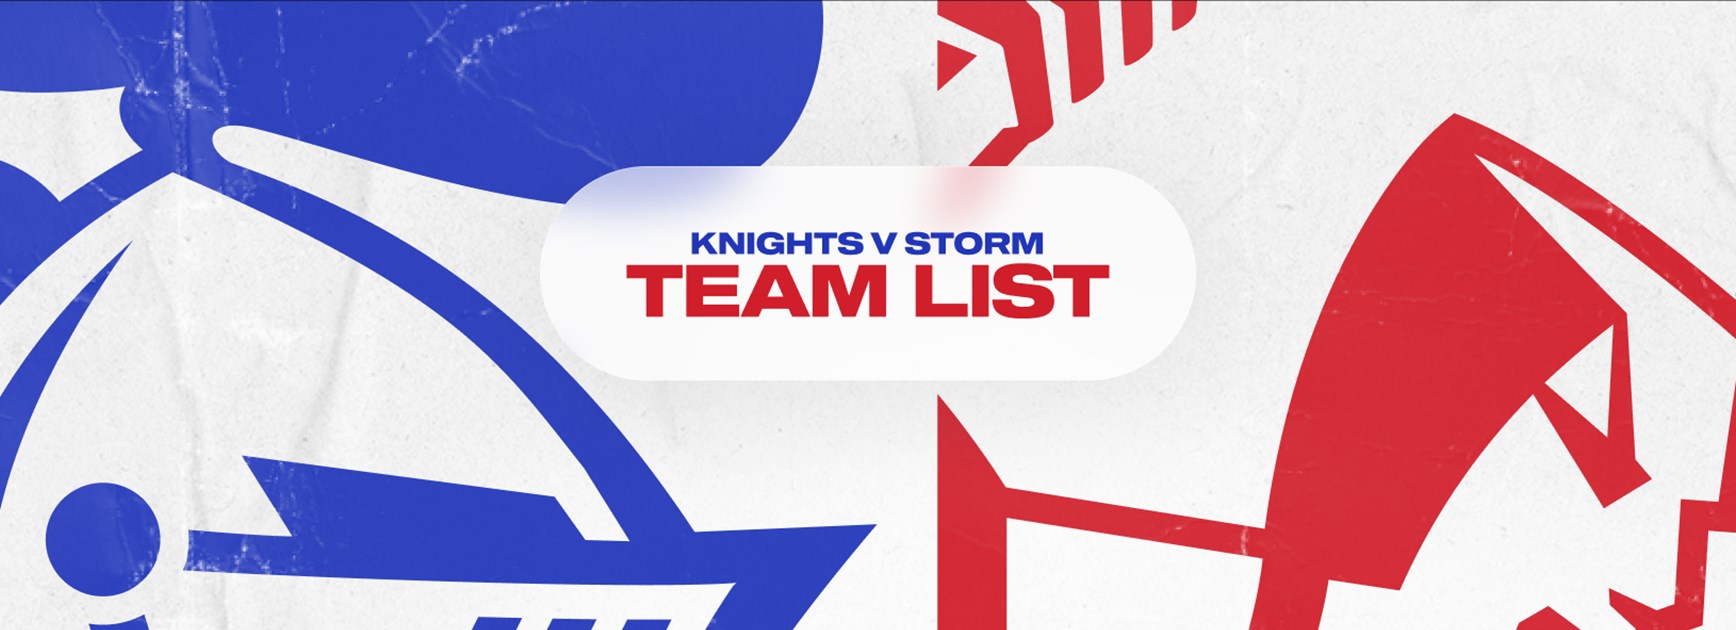 Knights v Storm Round 3 NRL team list